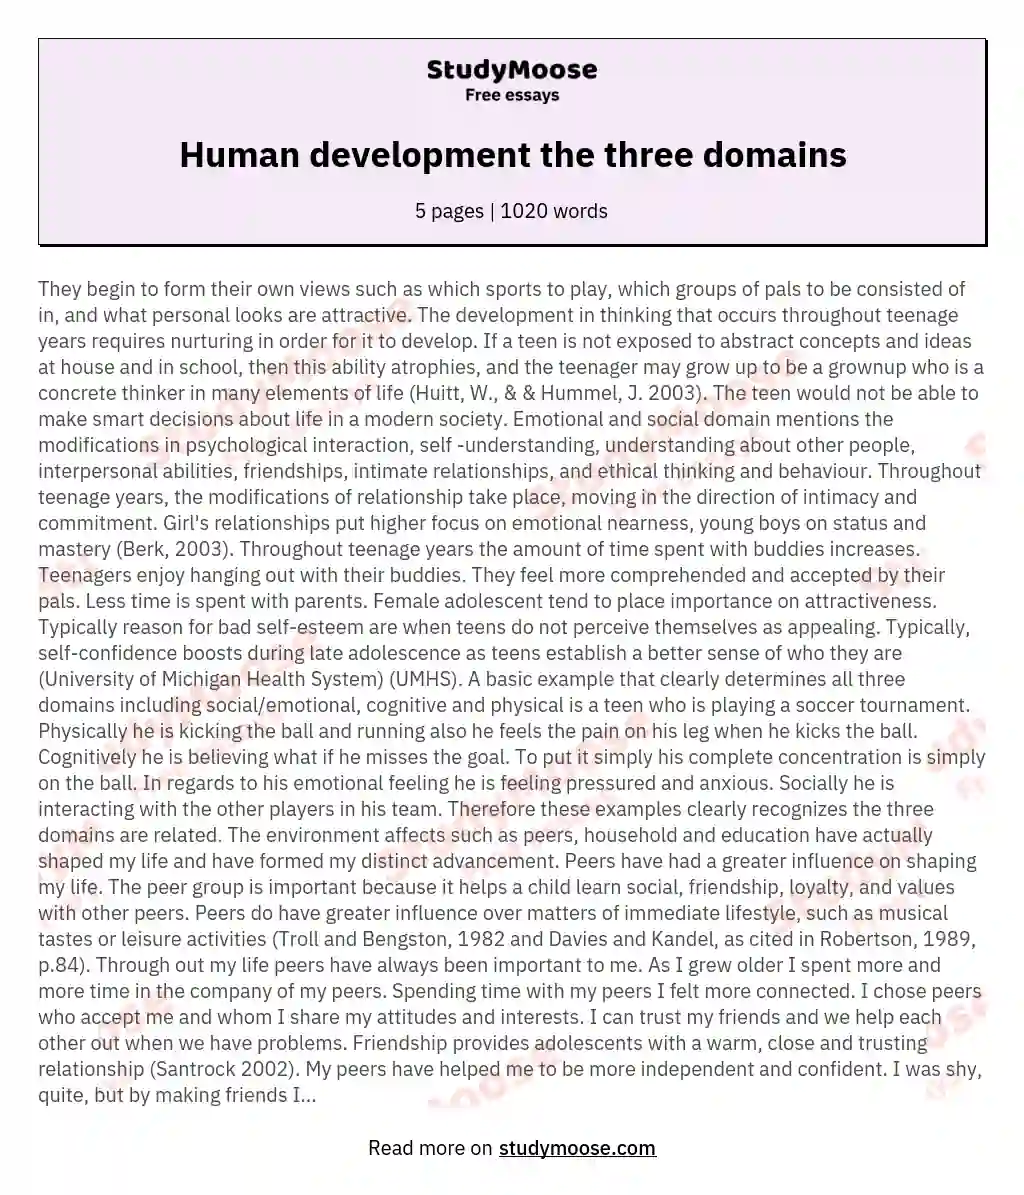 Human development the three domains essay